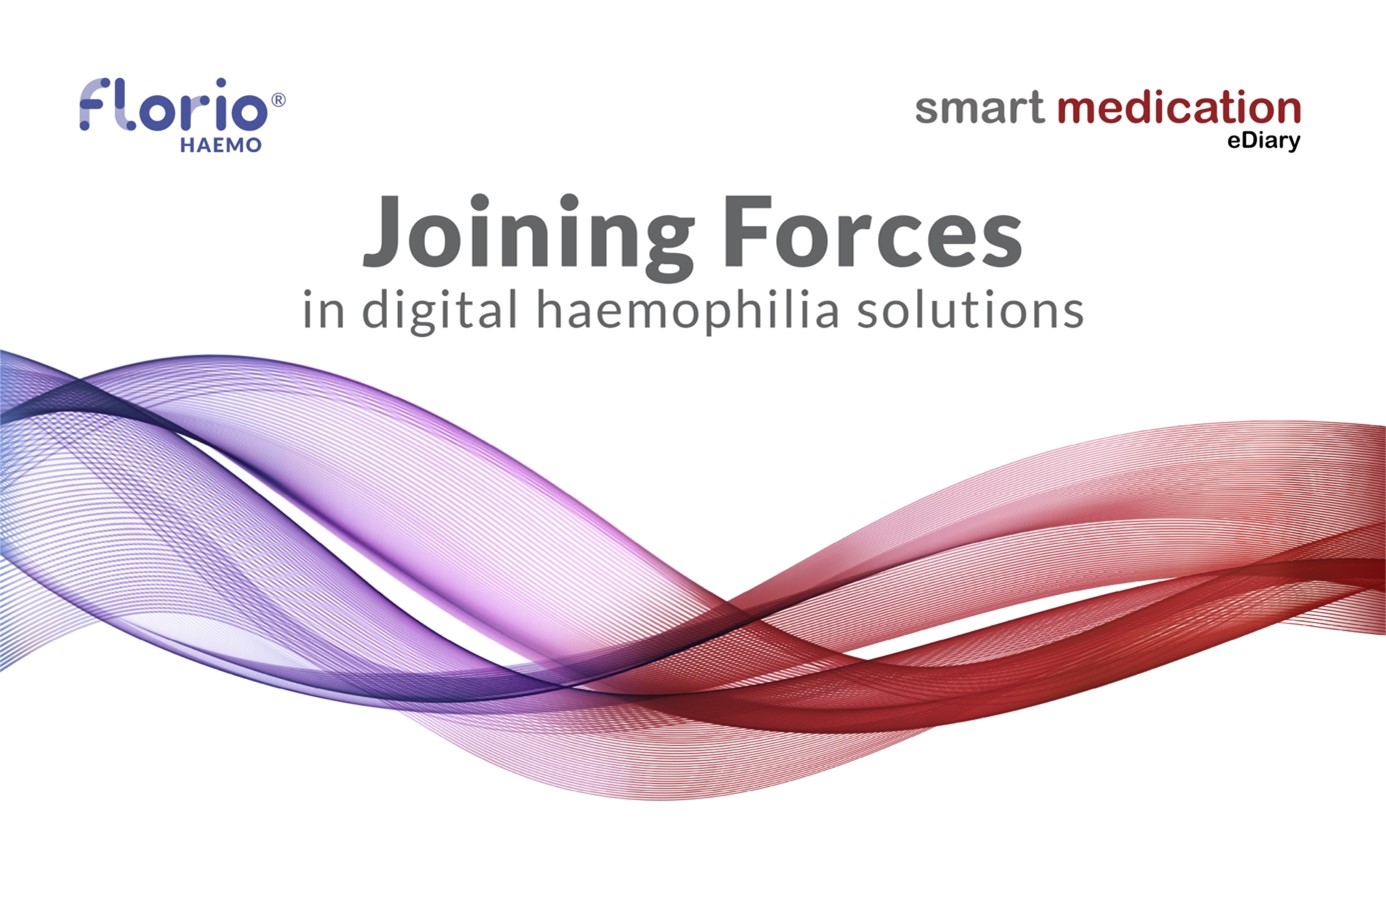 Digital solutions for haemophilia – a bright future ahead